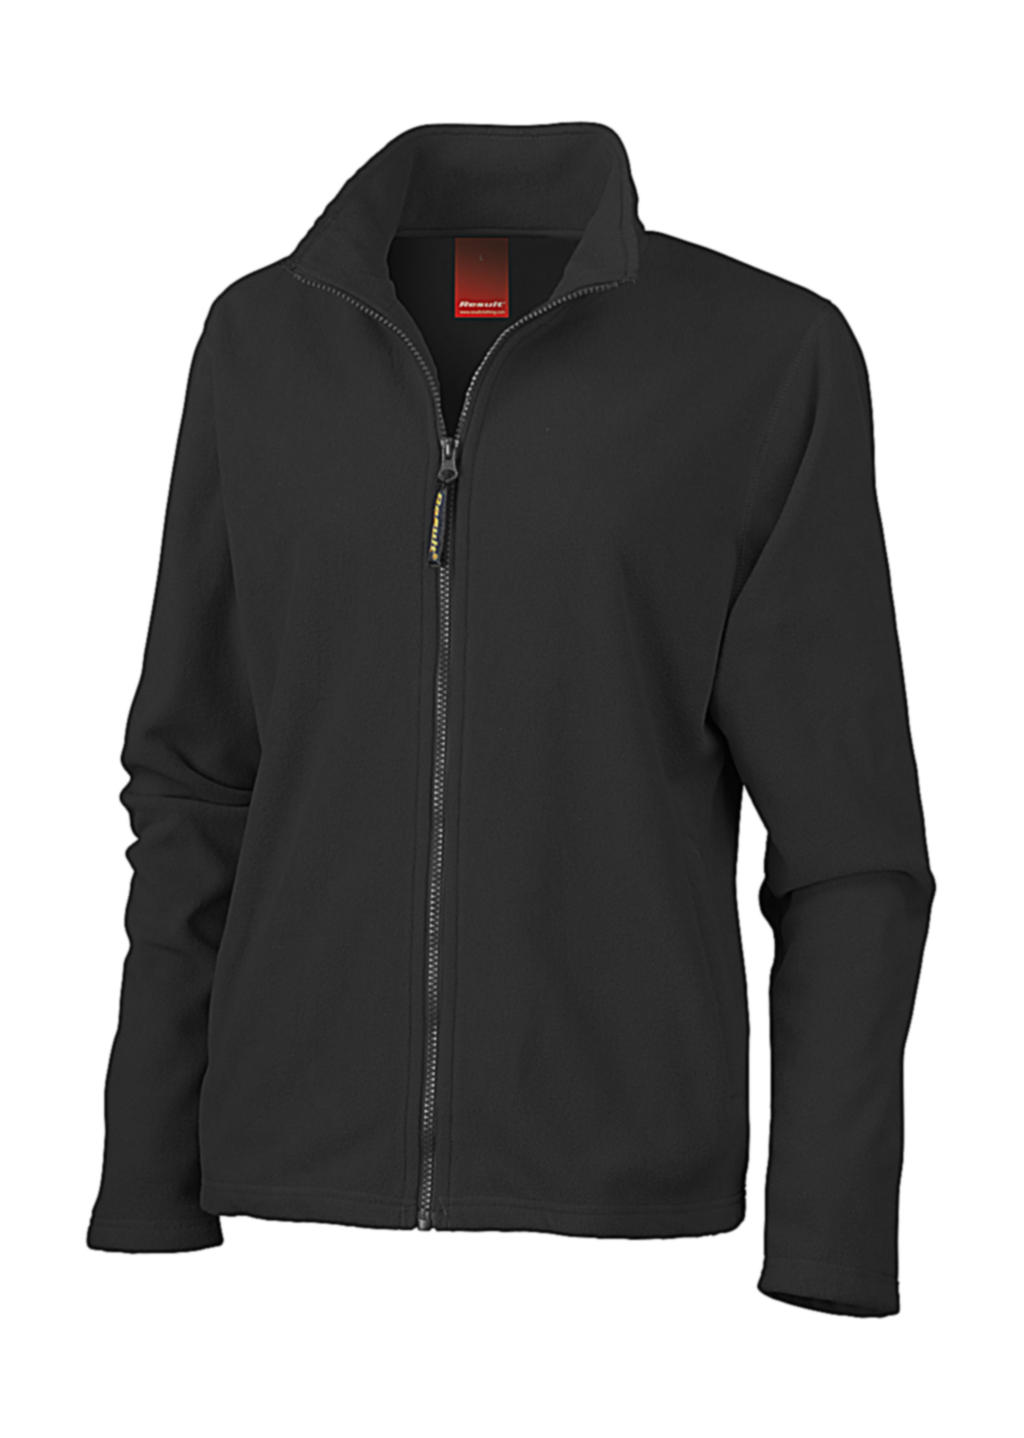  Ladies Horizon High Grade Microfleece Jacket in Farbe Black